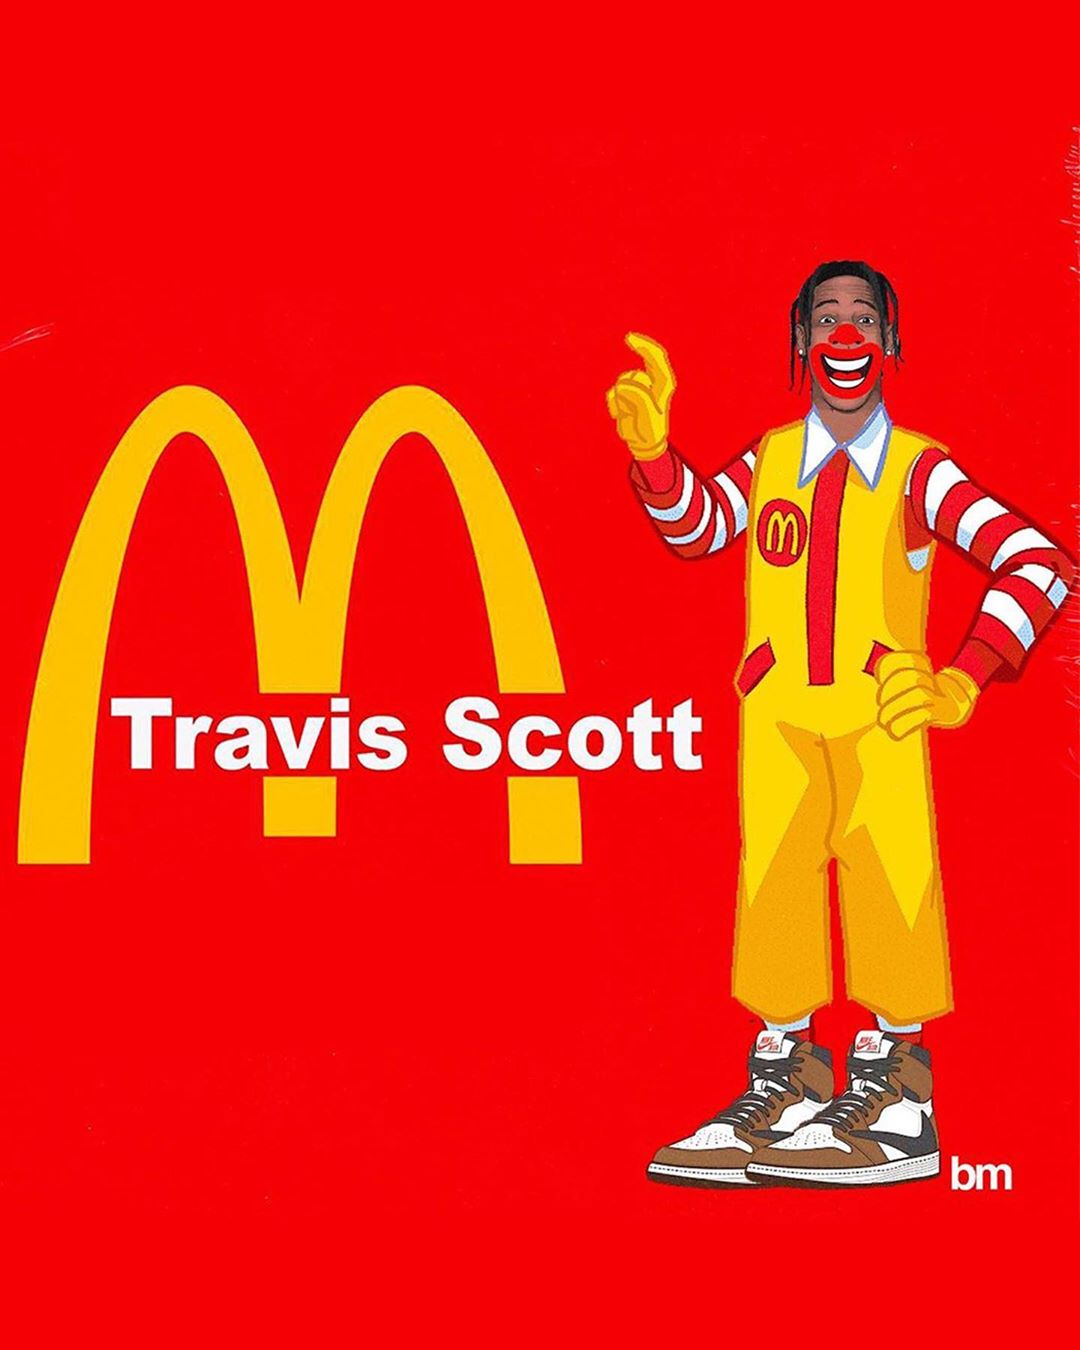 travis-scott-mcdonalds-collaboration-release-202009